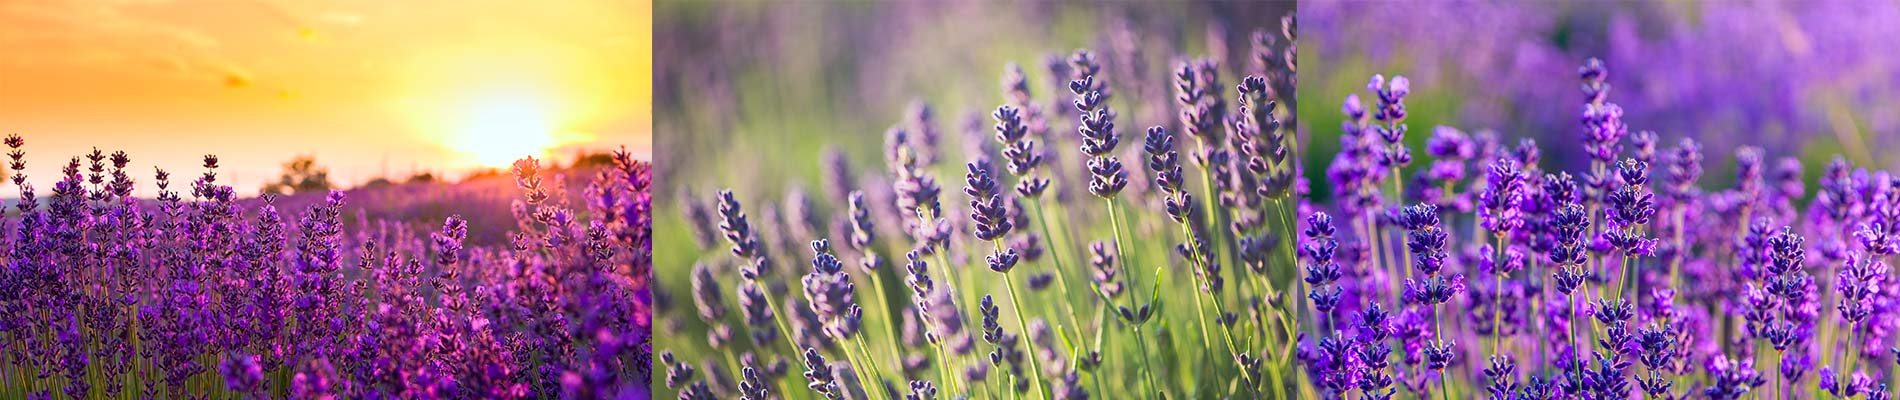 lavender field collage